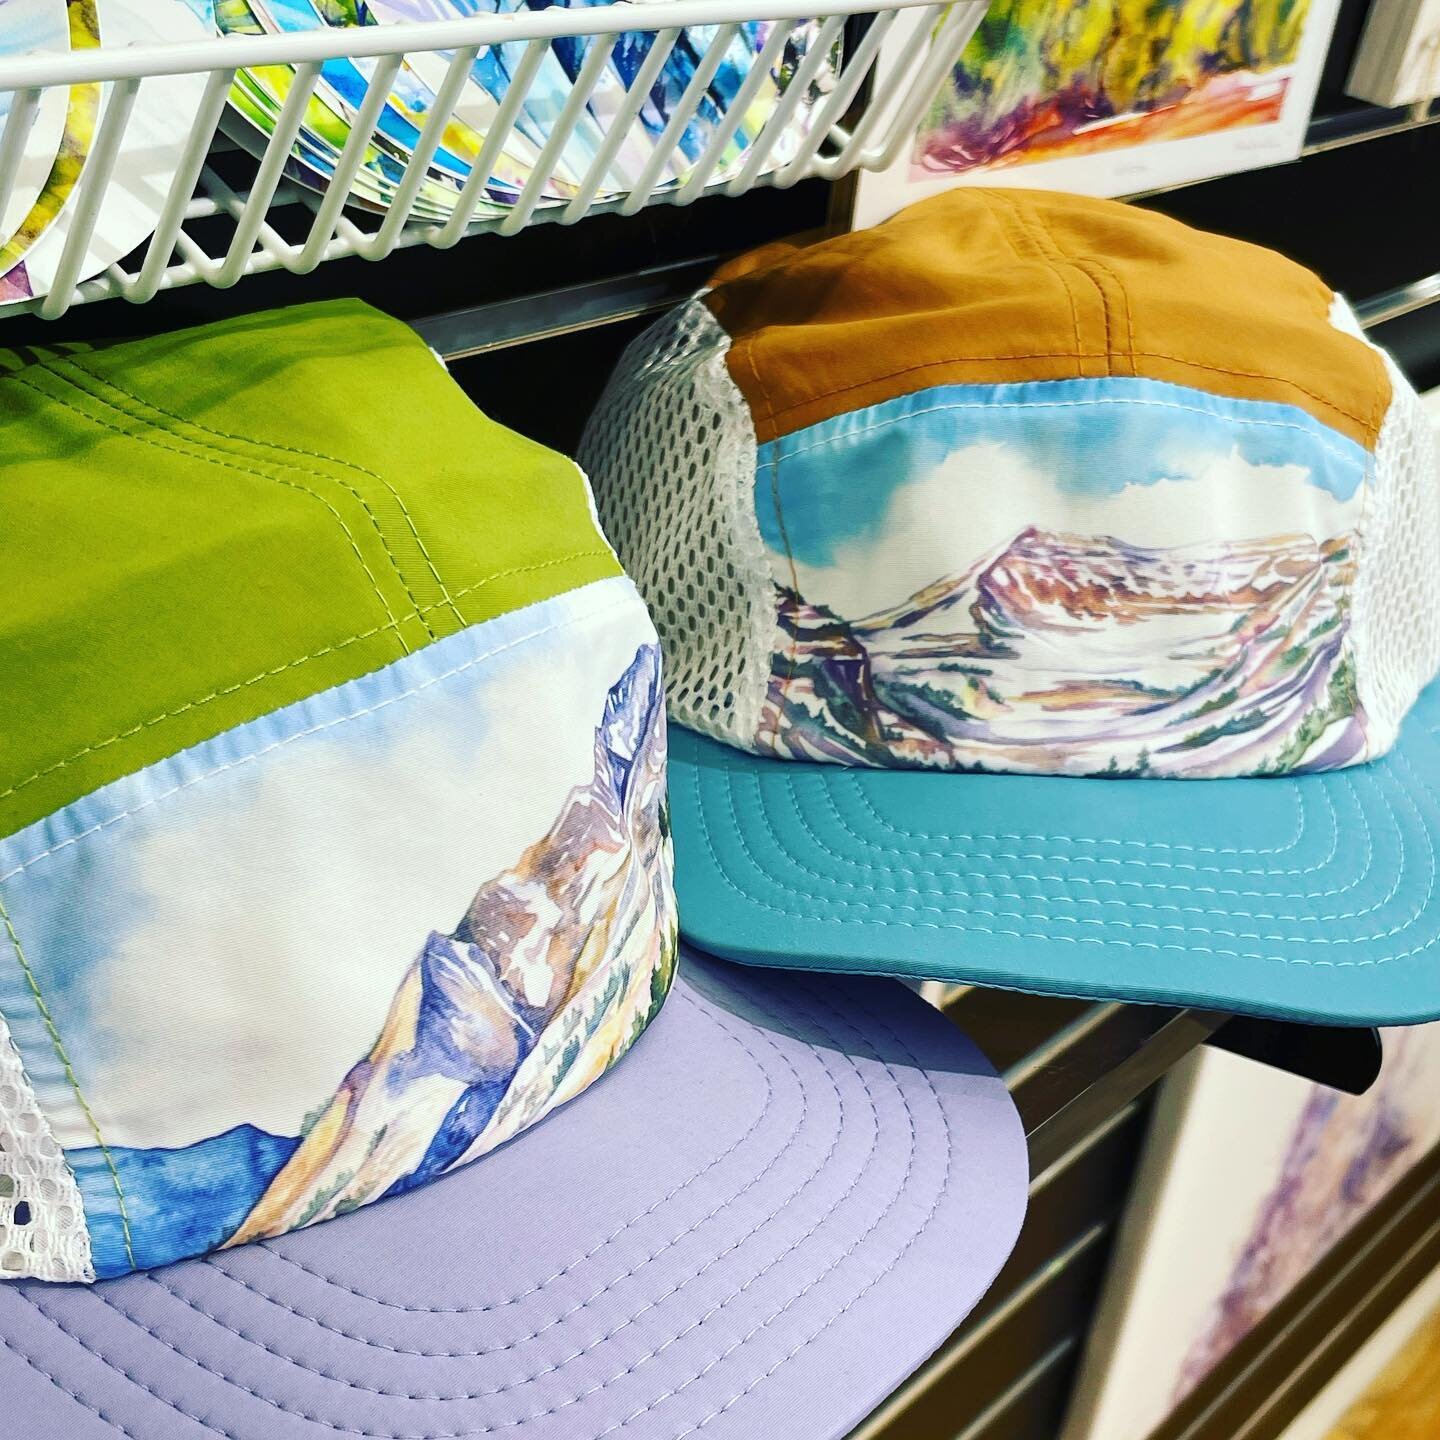 @annaleighmoo has some amazing new hats on the shelf!!! 
*
*
*
#saltlakecity #slc #801 #utah #utahisrad #utahgram #igutah #beutahful #exploreutah #utahunique #utahartist #slcartist #handmade #memade #upcycled #memadeeveryday #thehivemarketslc #trolle